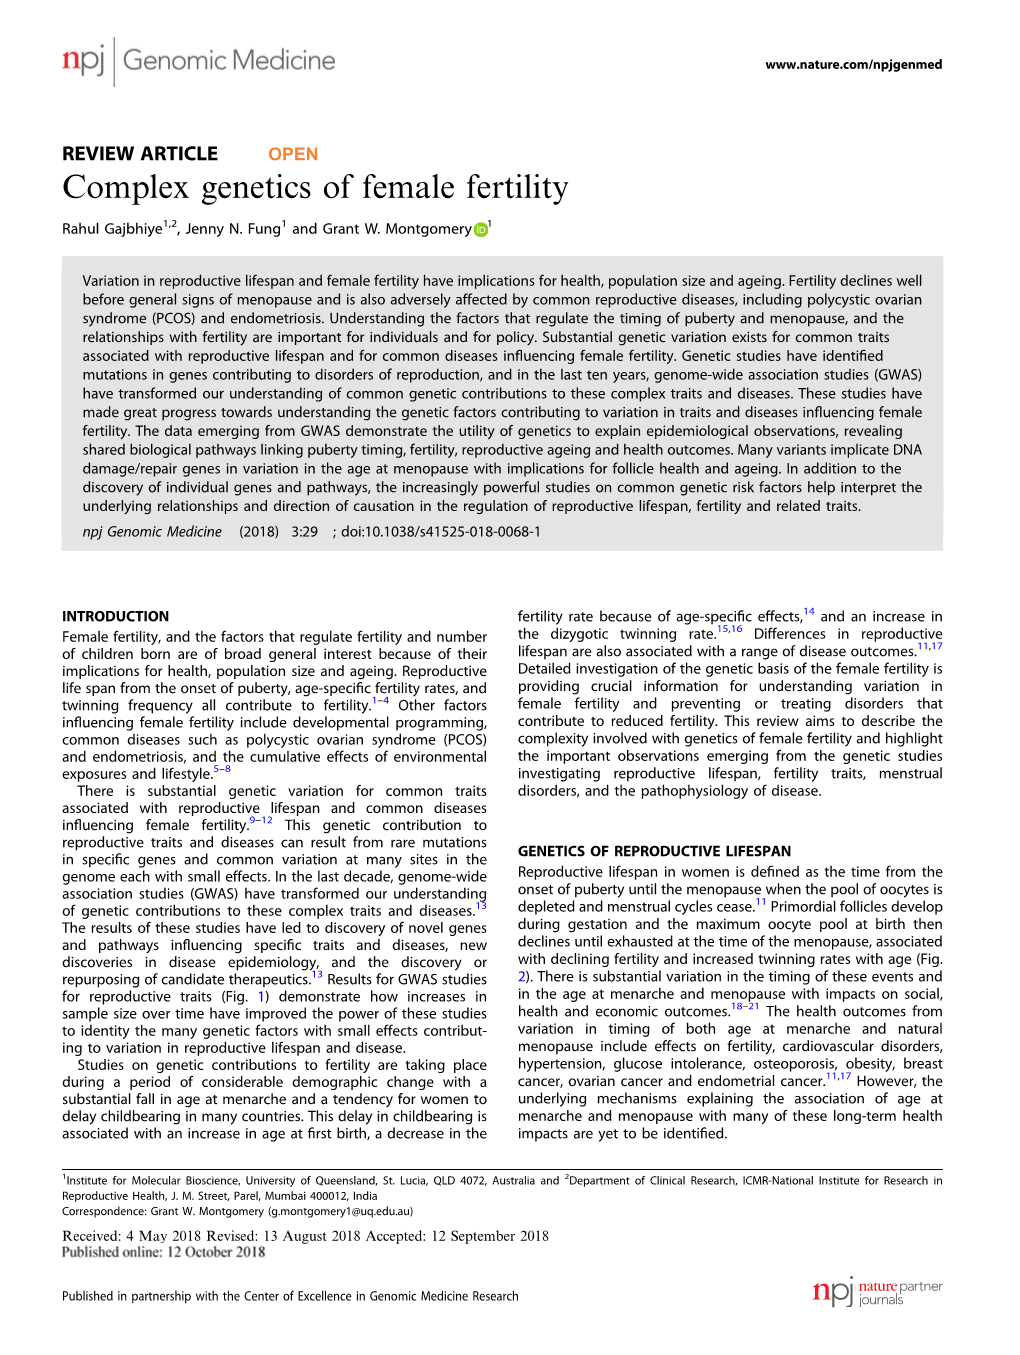 Complex Genetics of Female Fertility